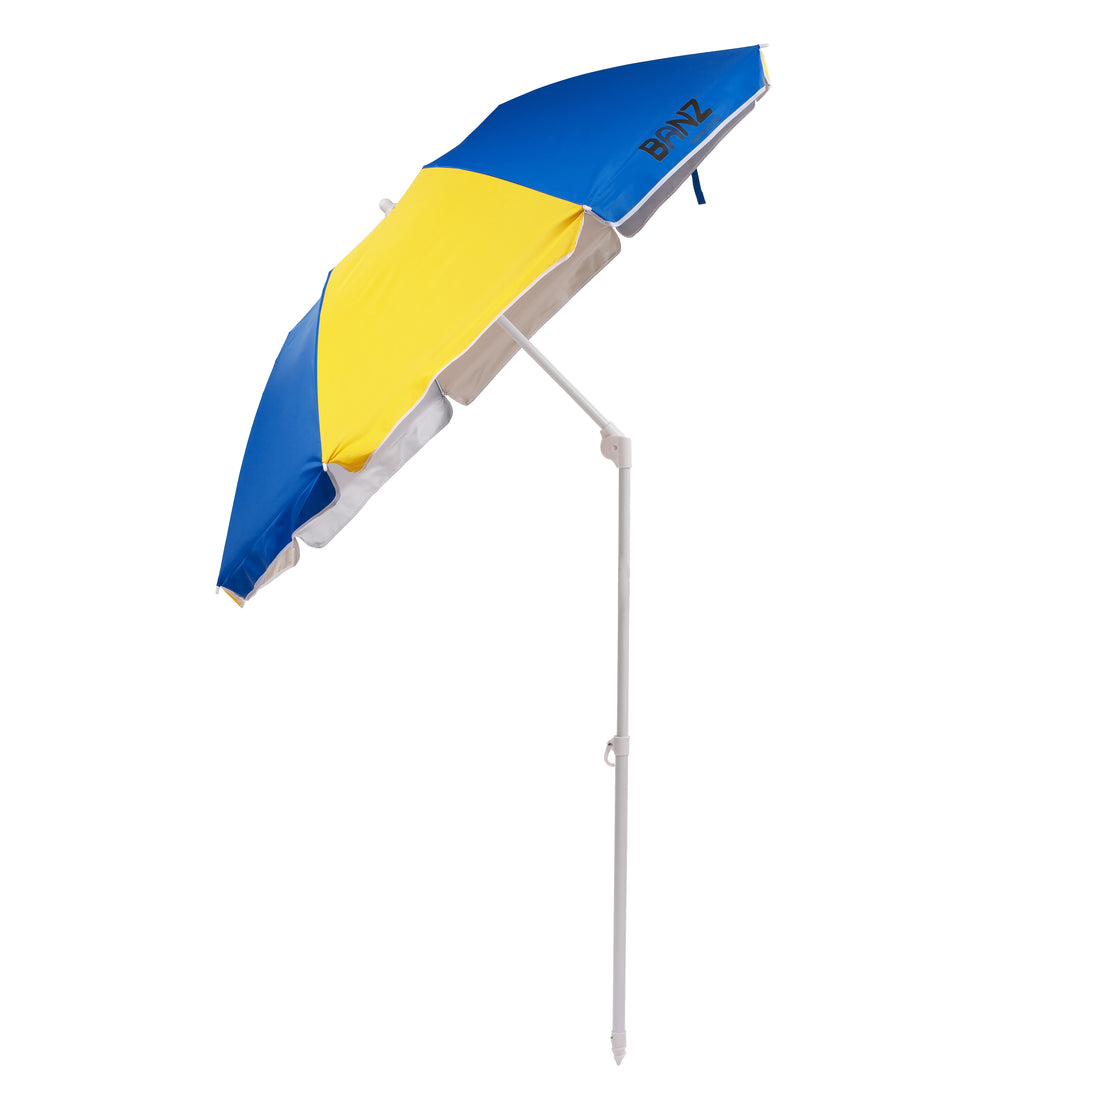 Banz Foldabrella Beach Umbrella